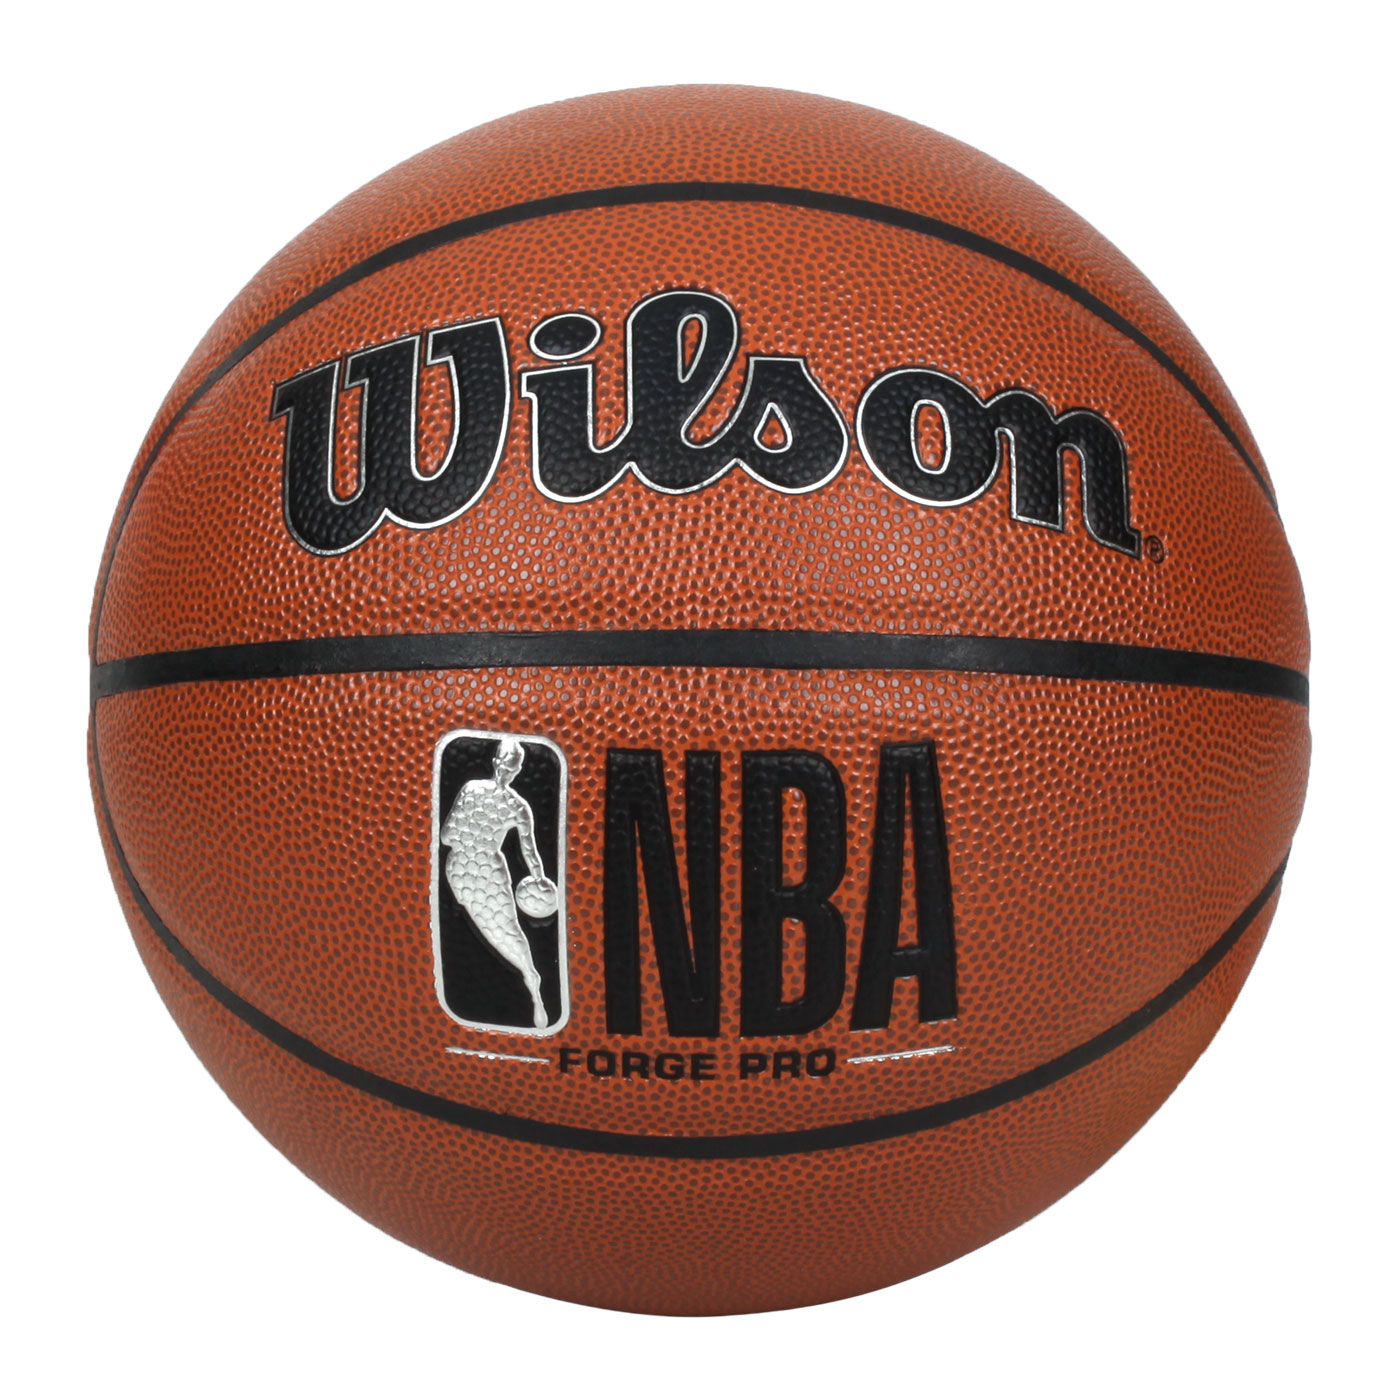 WILSON NBA FORGE系列 PRO 合成皮籃球 #7 WTB8000XB07 - 棕黑